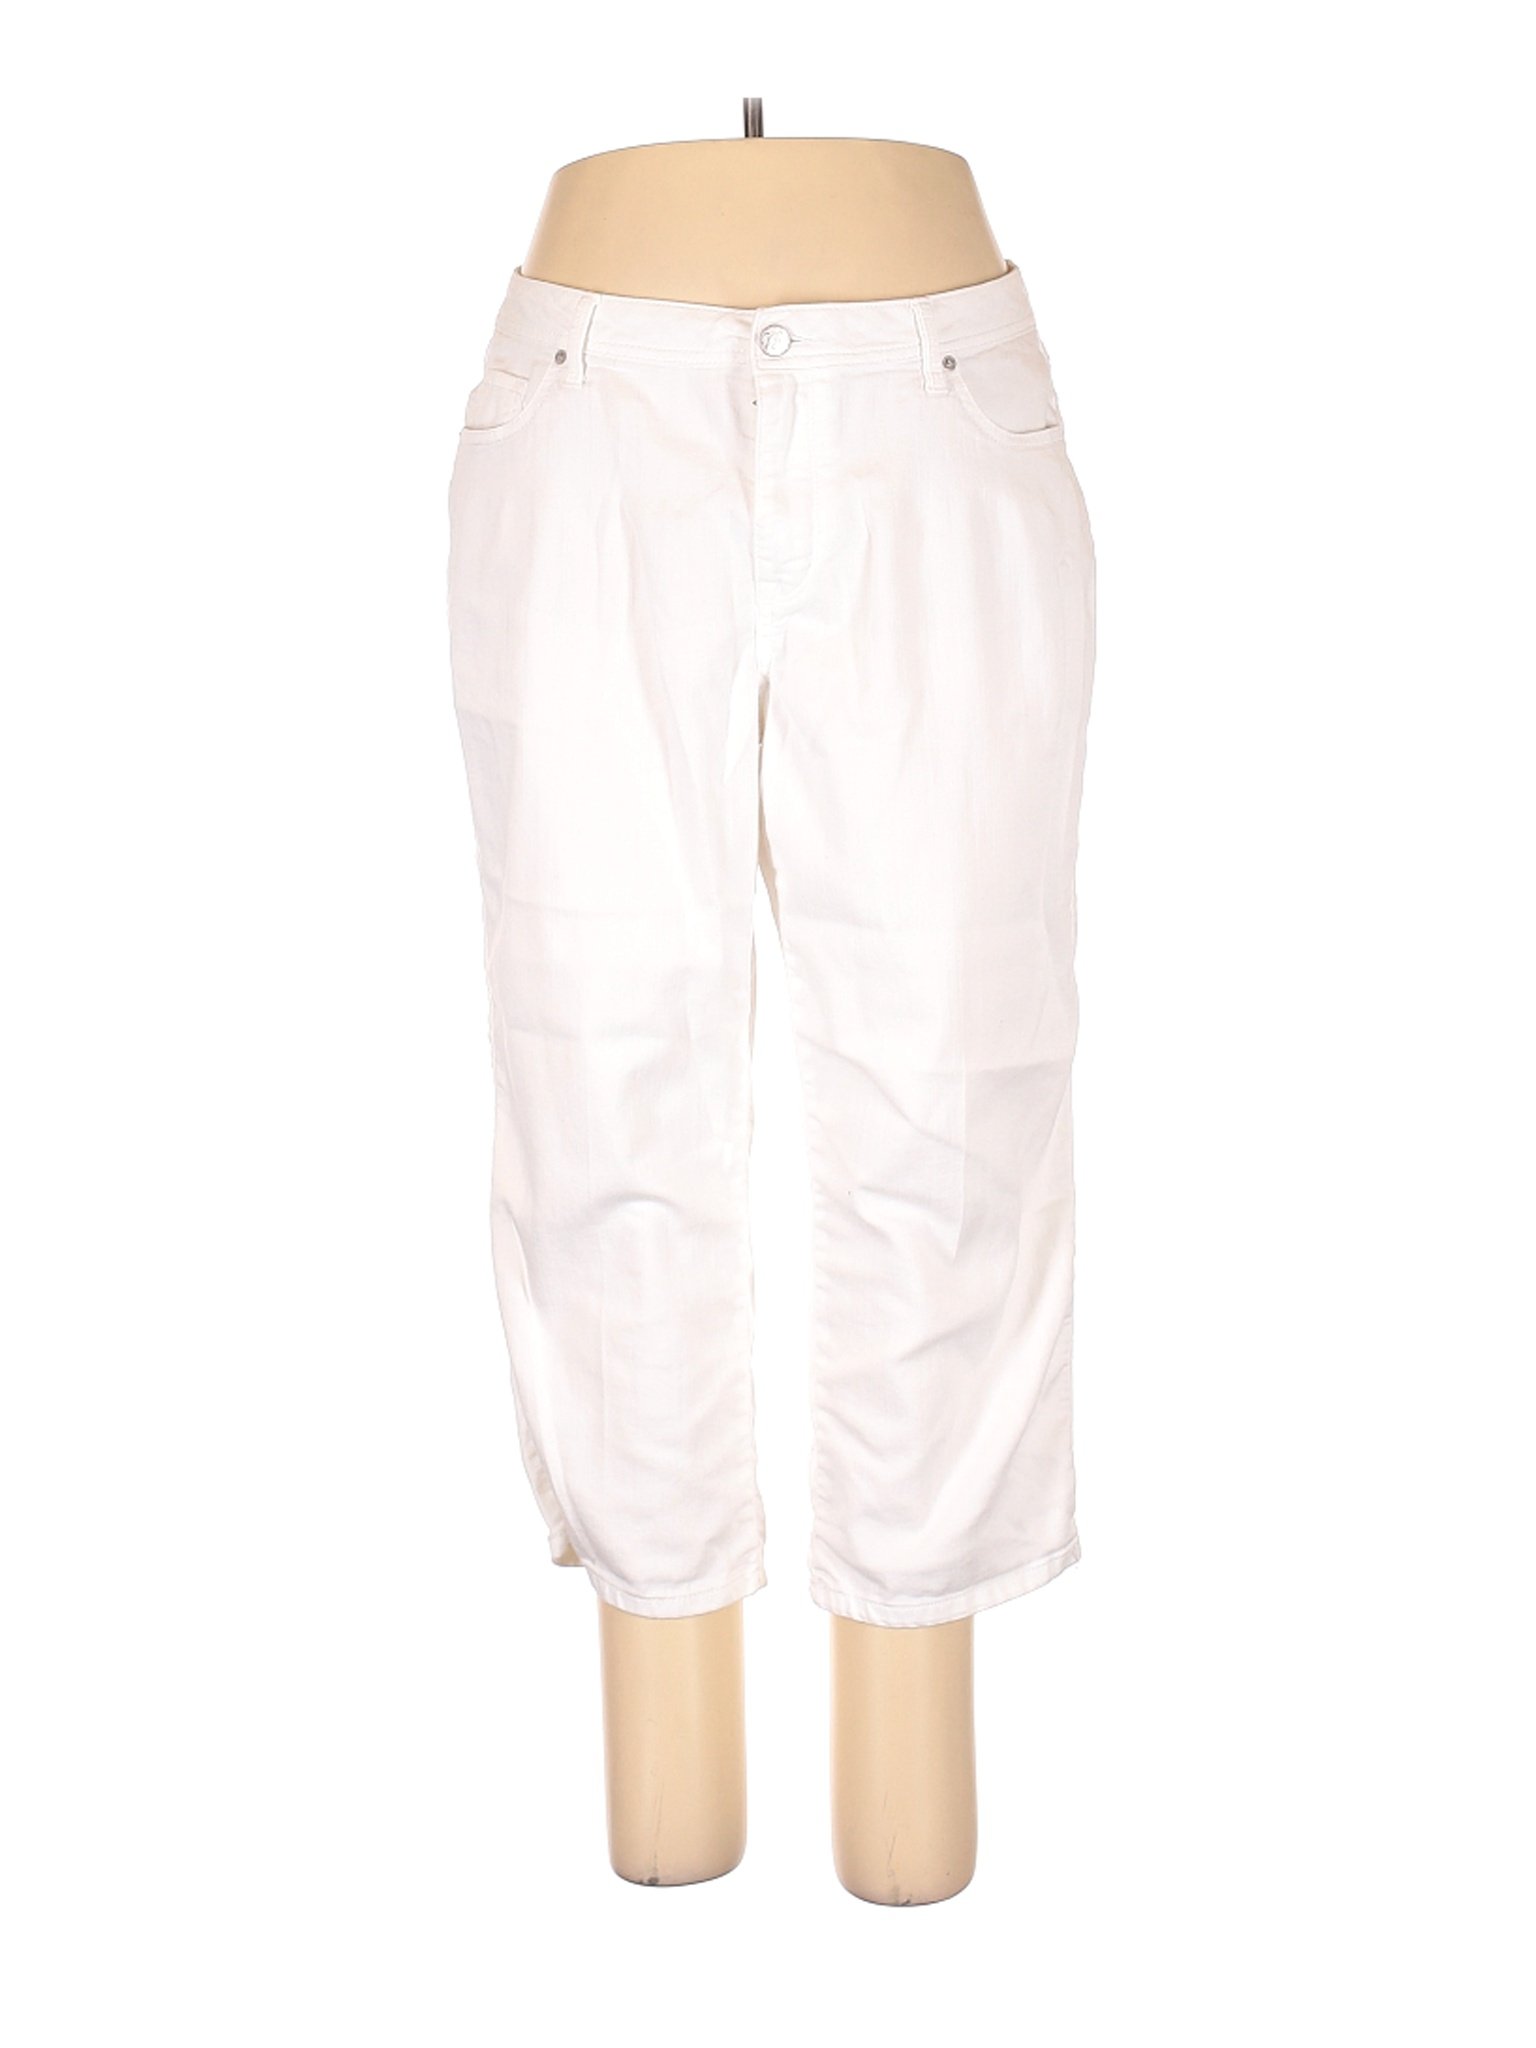 Westport 1962 Women White Jeans 14 | eBay